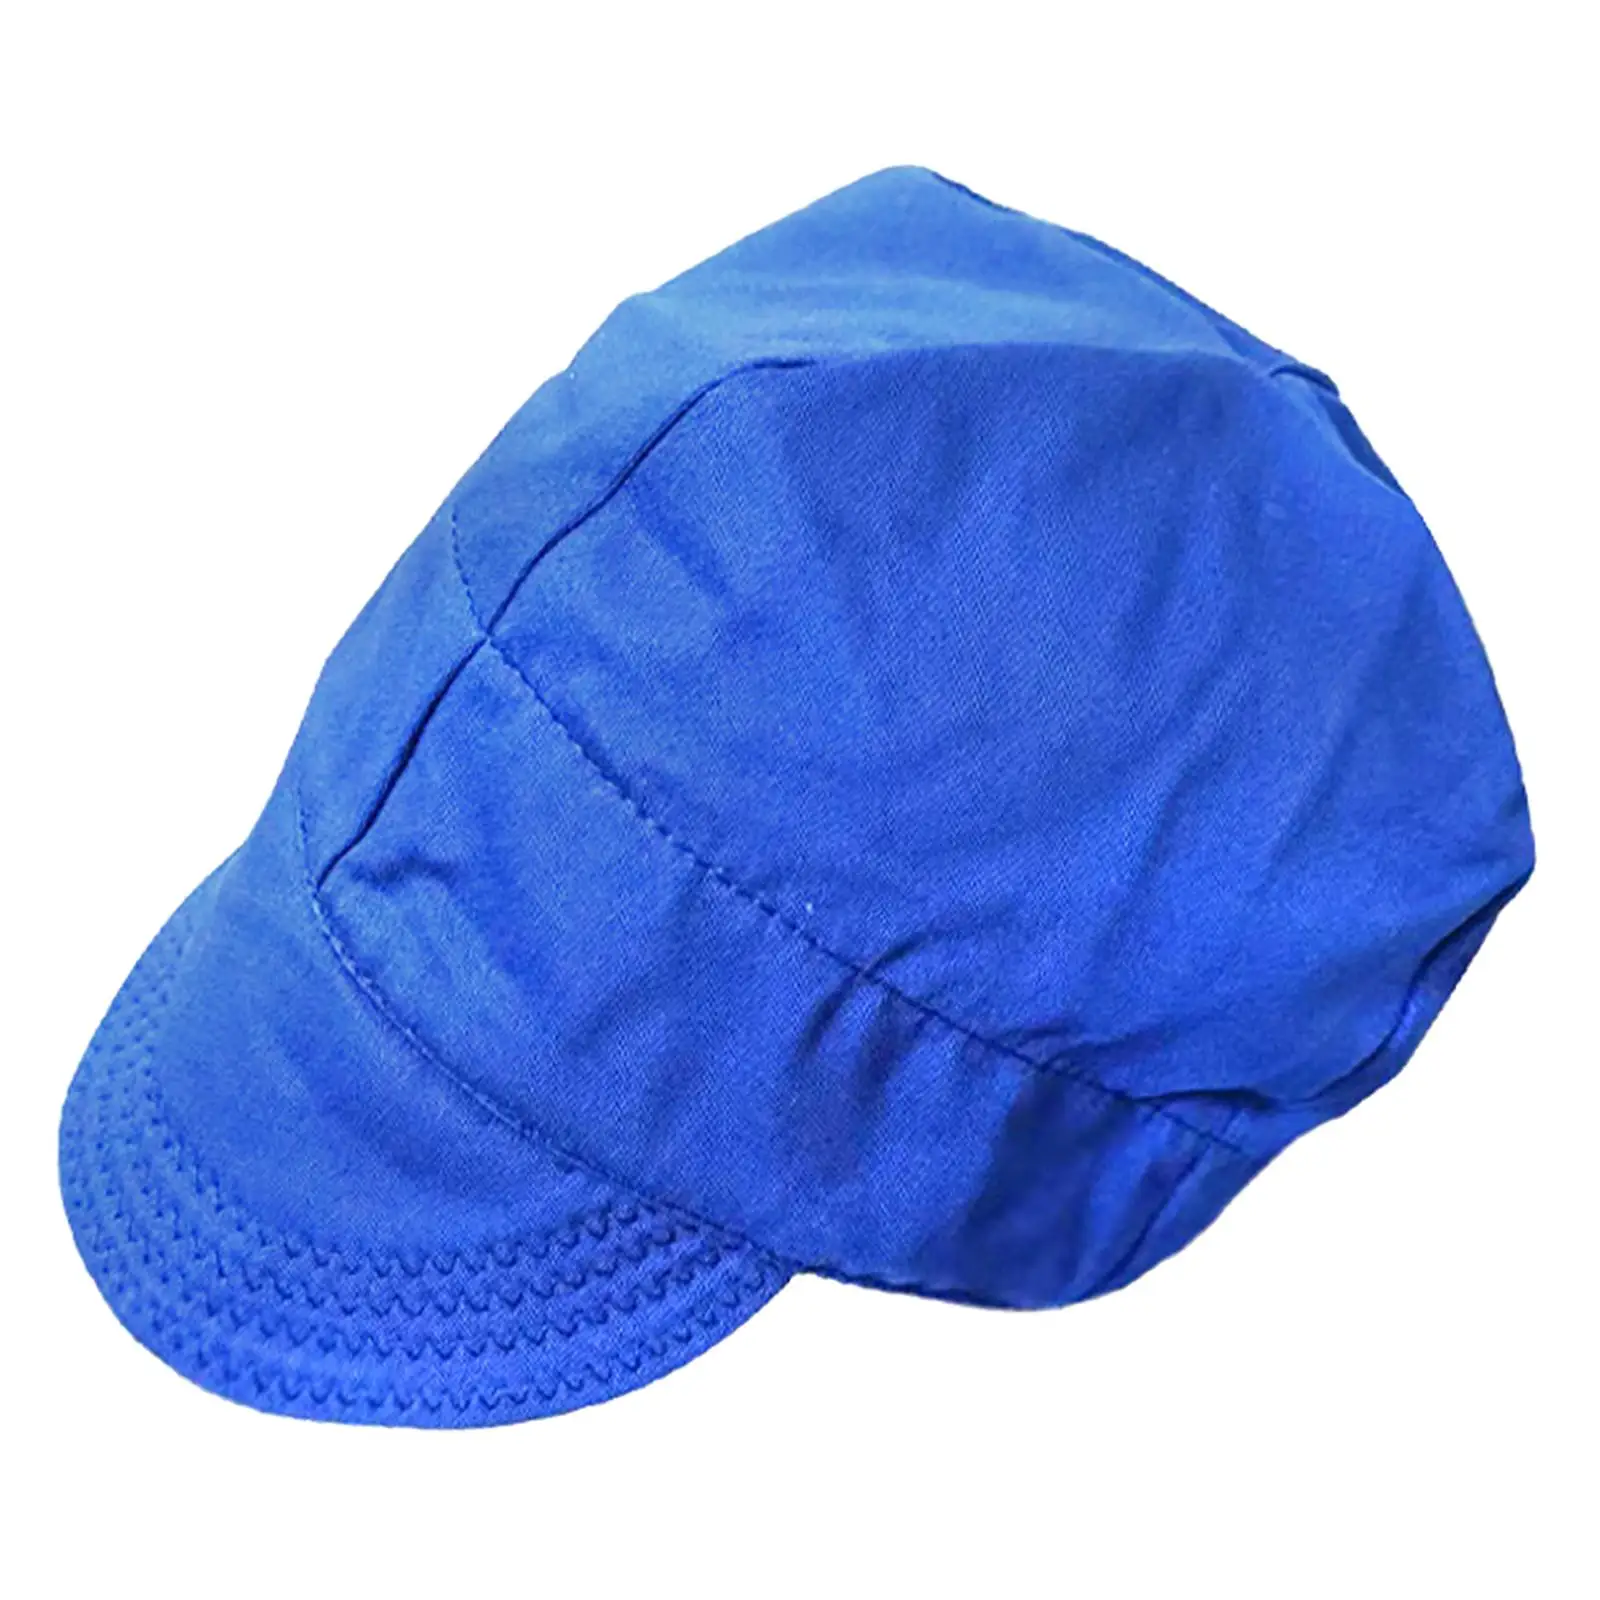 Welding Caps Head Protective Bandana Type Adjustable Work Caps Hoods Cotton